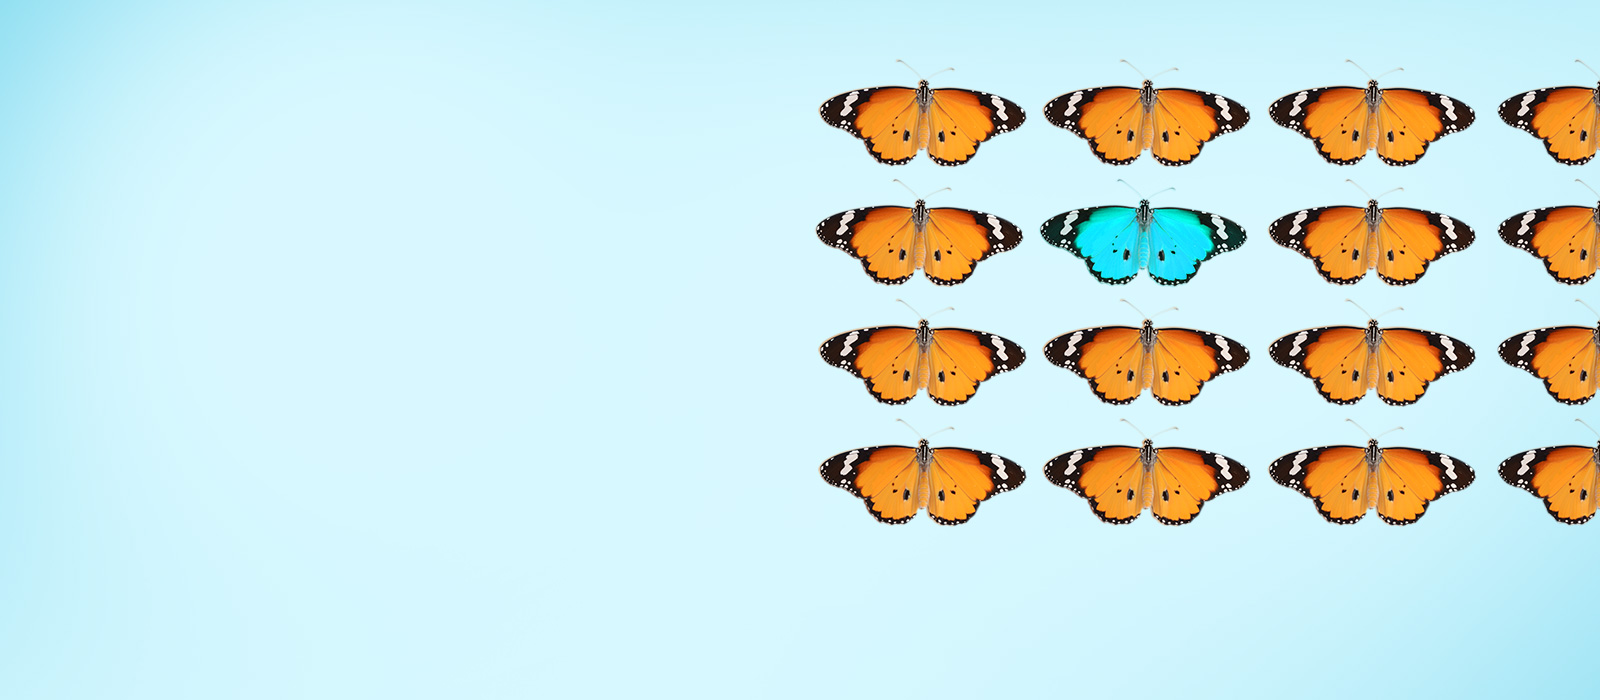 Group of butterflies concept